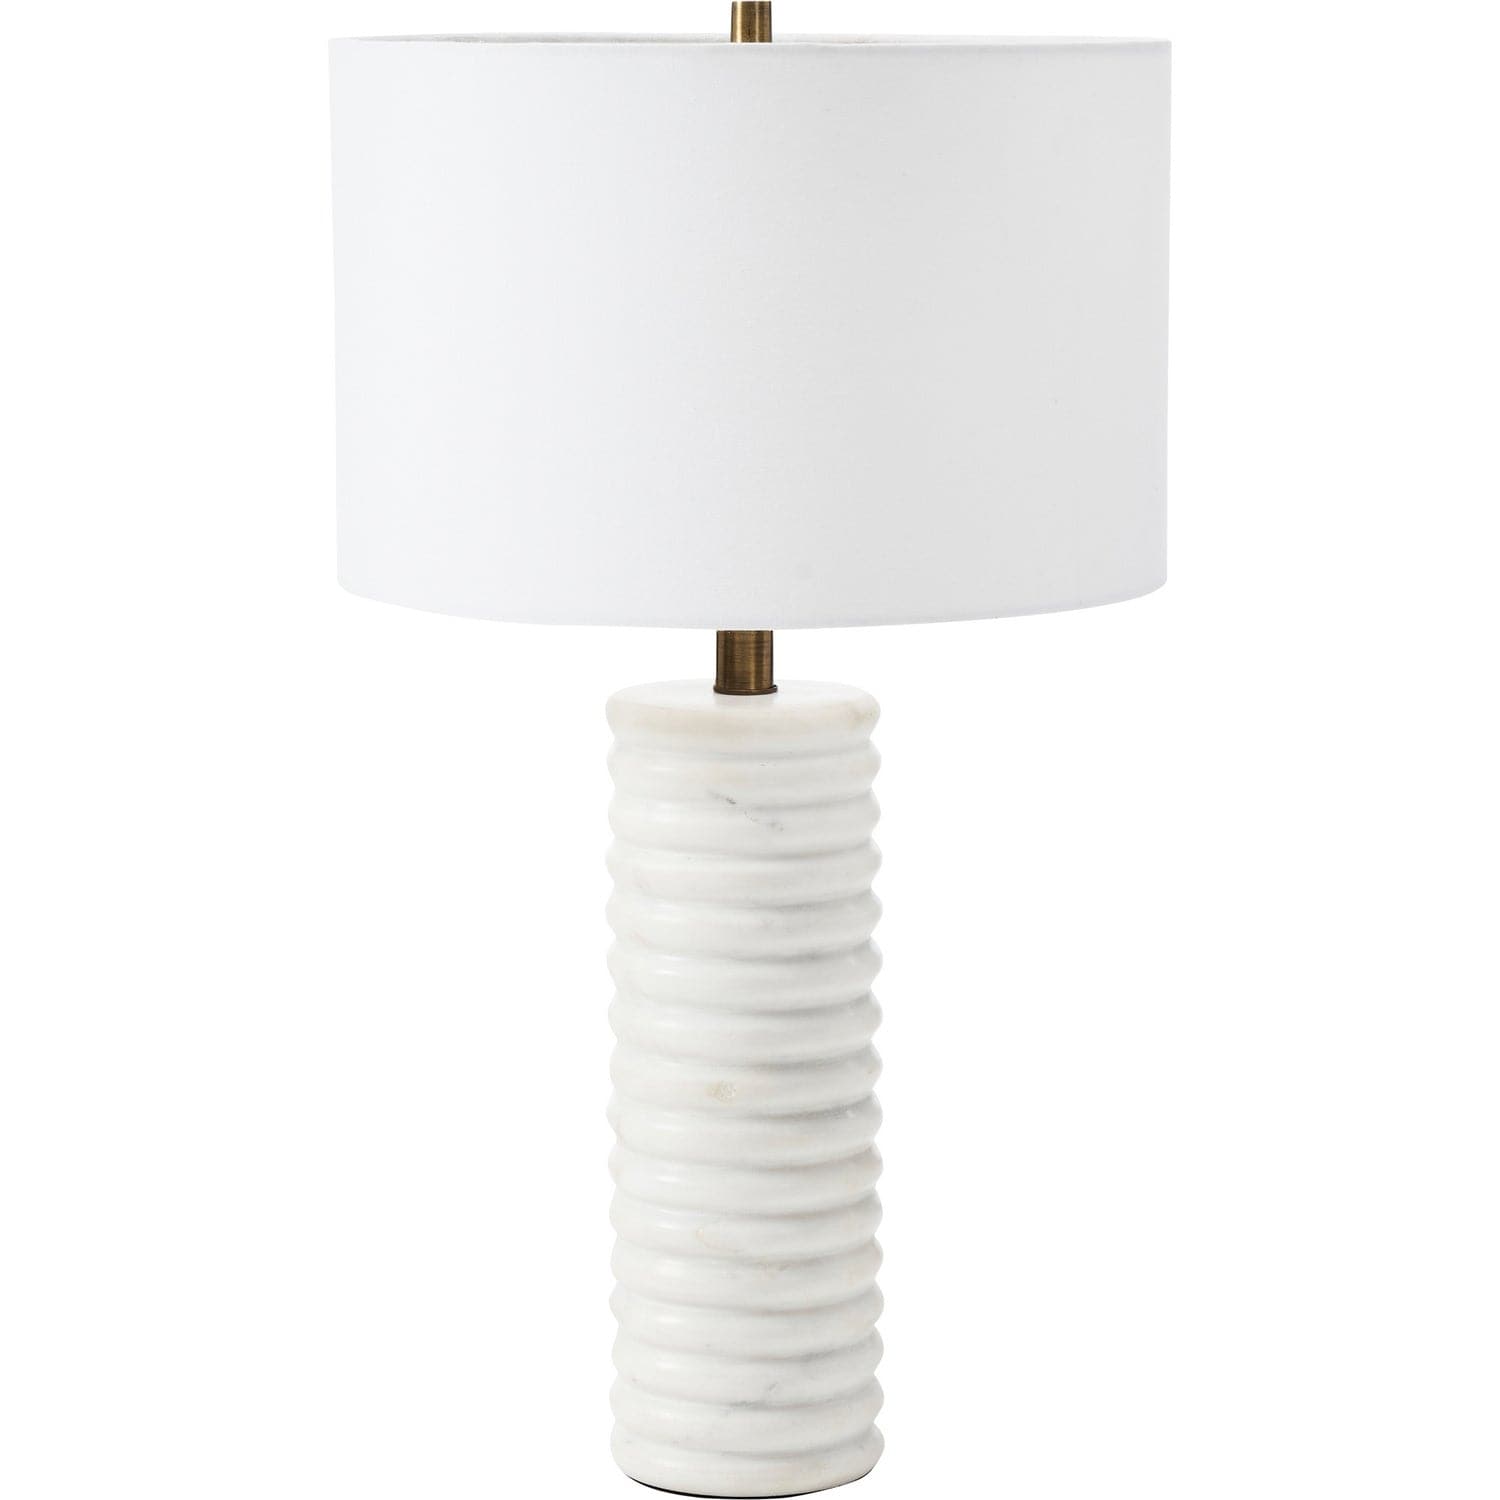 Renwil - LPT1194 - One Light Table Lamp - Sumner - White